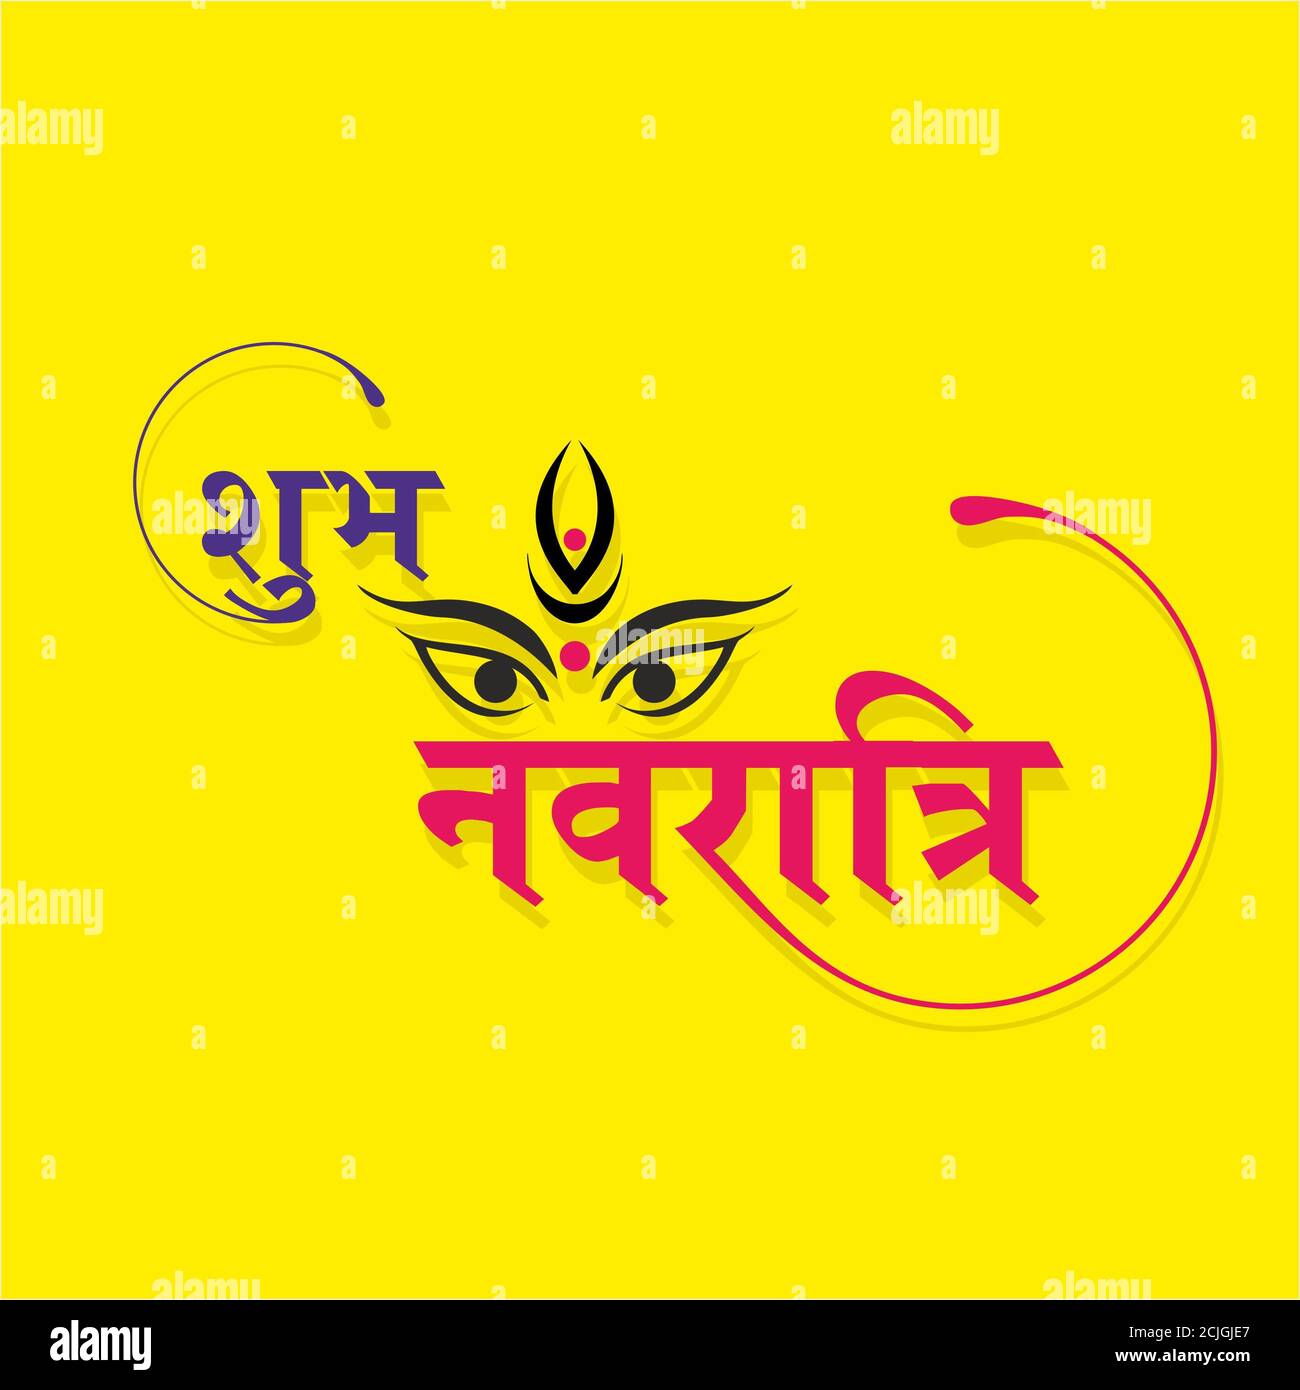 Happy Navratri or Shubh Navratri Banner on White Background - Indian  Festival Stock Photo - Alamy